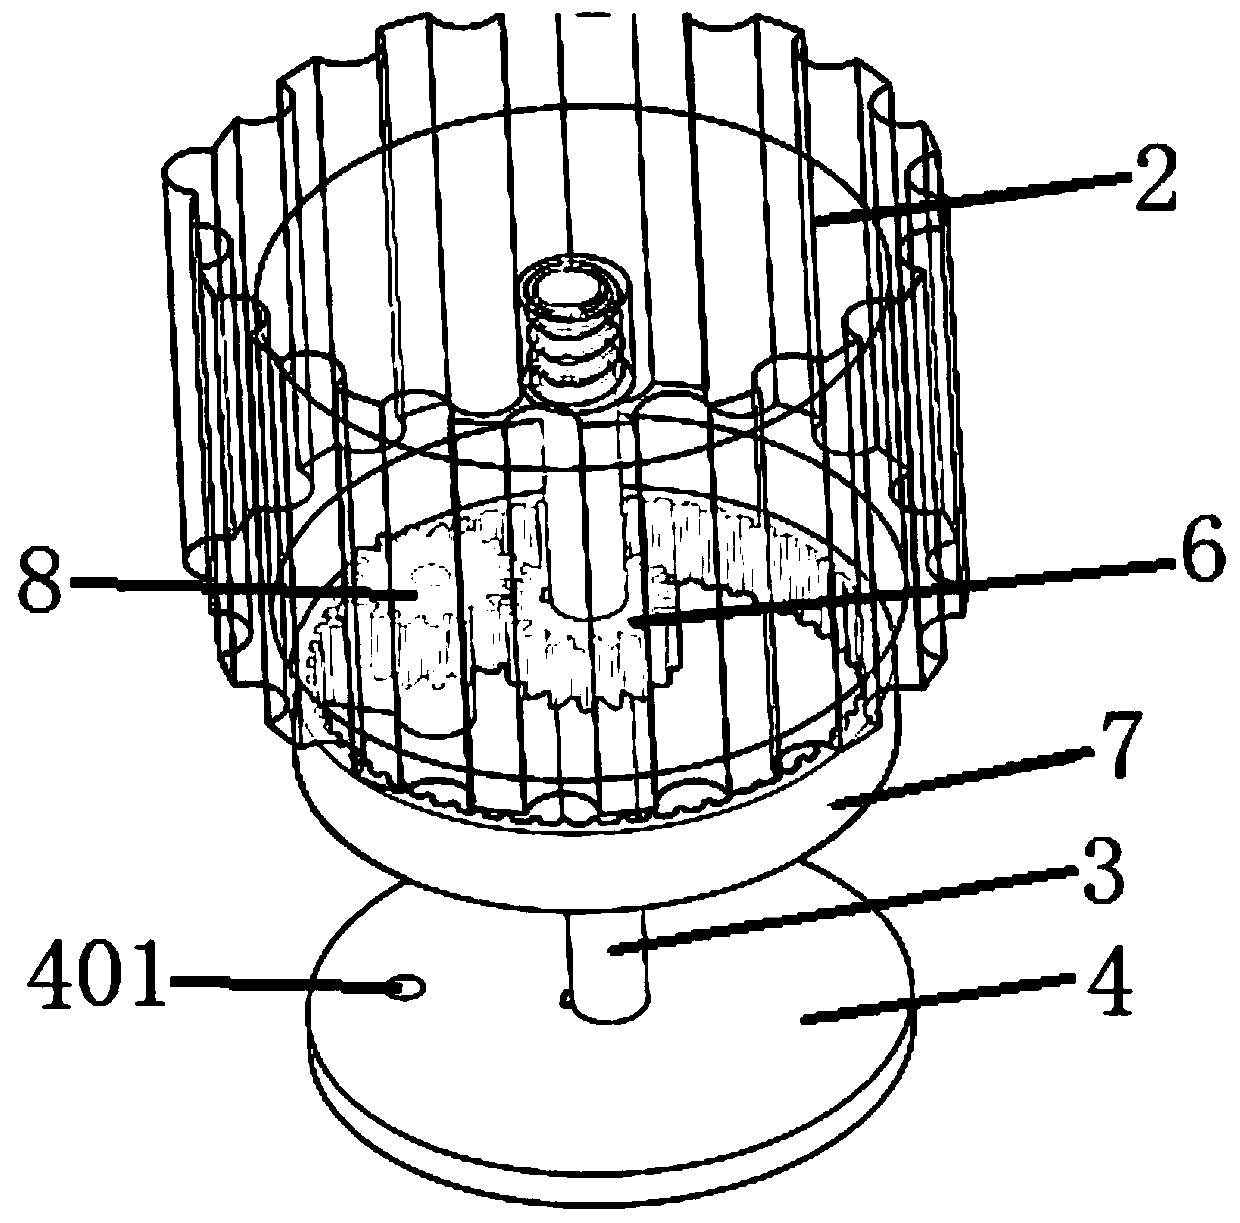 Volume knob type dry powder storage and inhalation device